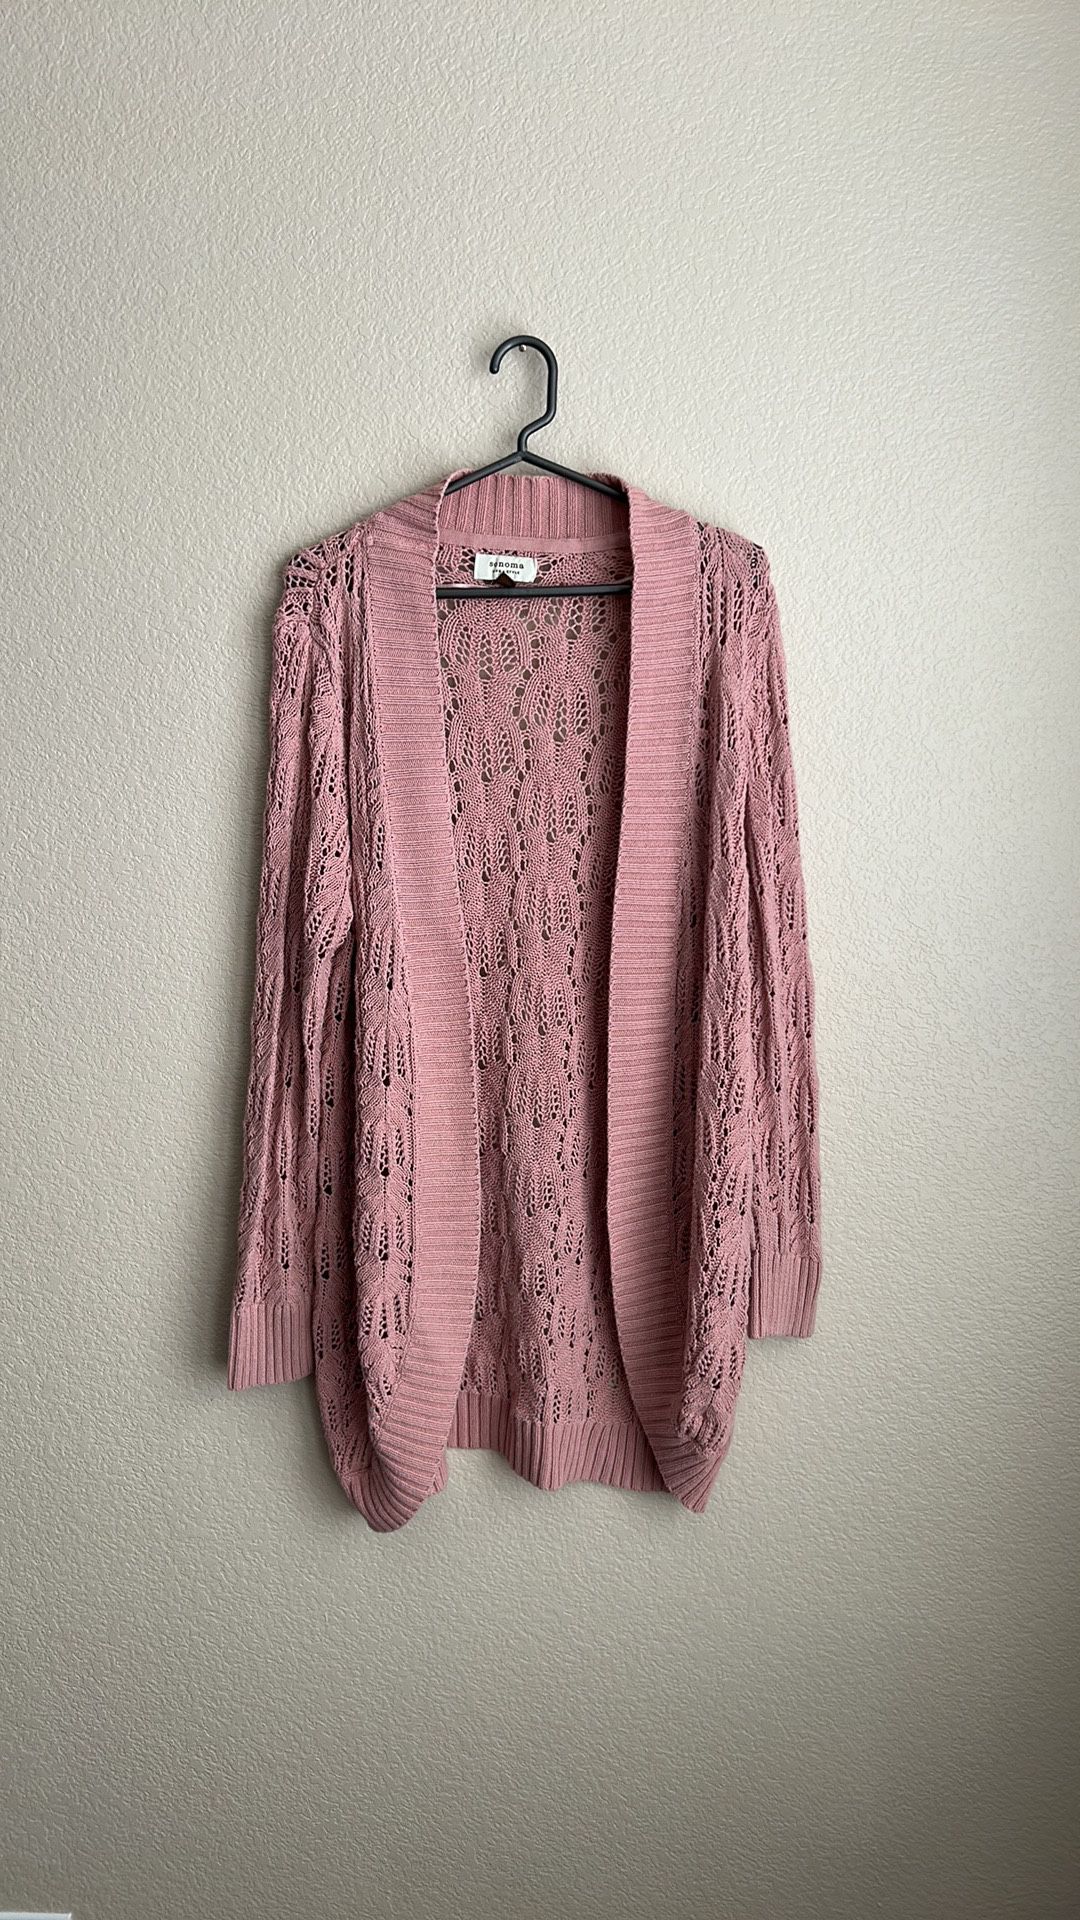 Size L Sonoma Mauve Crochet Long Cardigan - like new